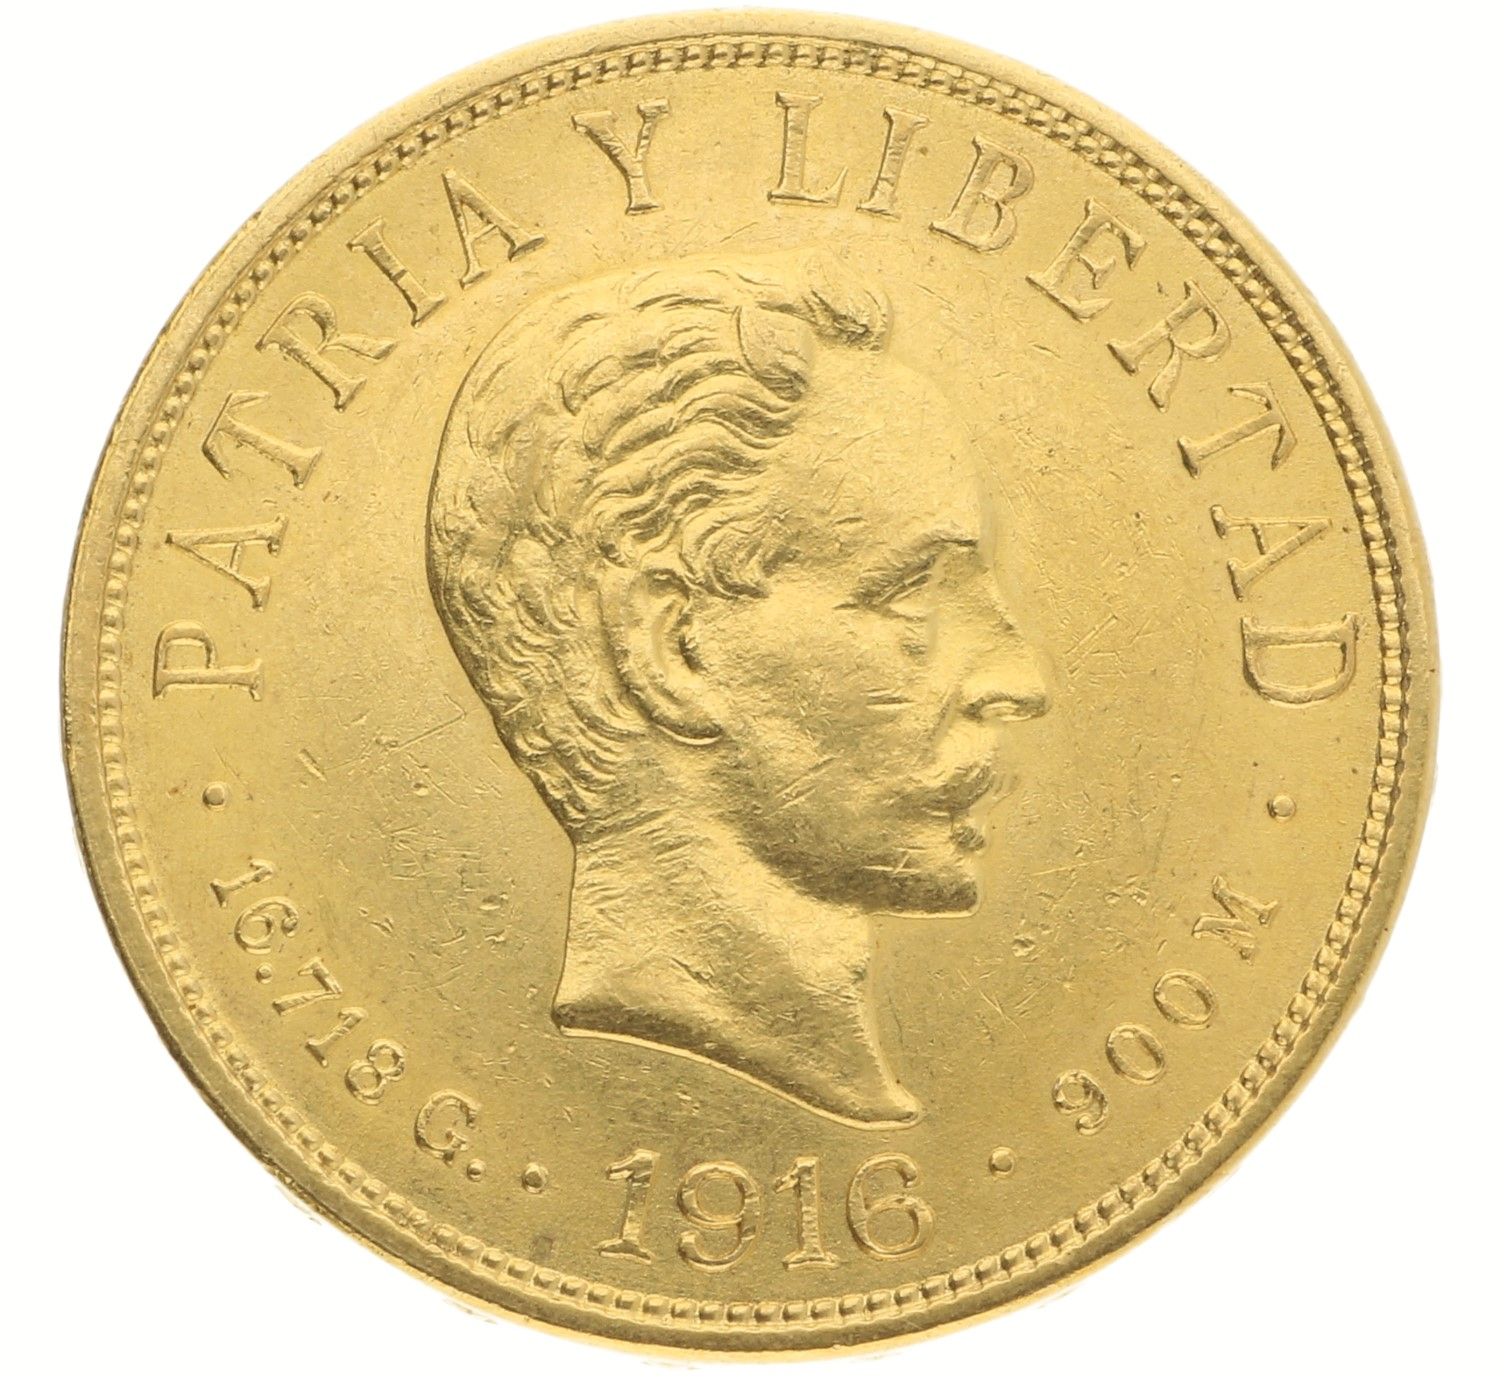 10 Pesos - Cuba - 1916 - GOLD